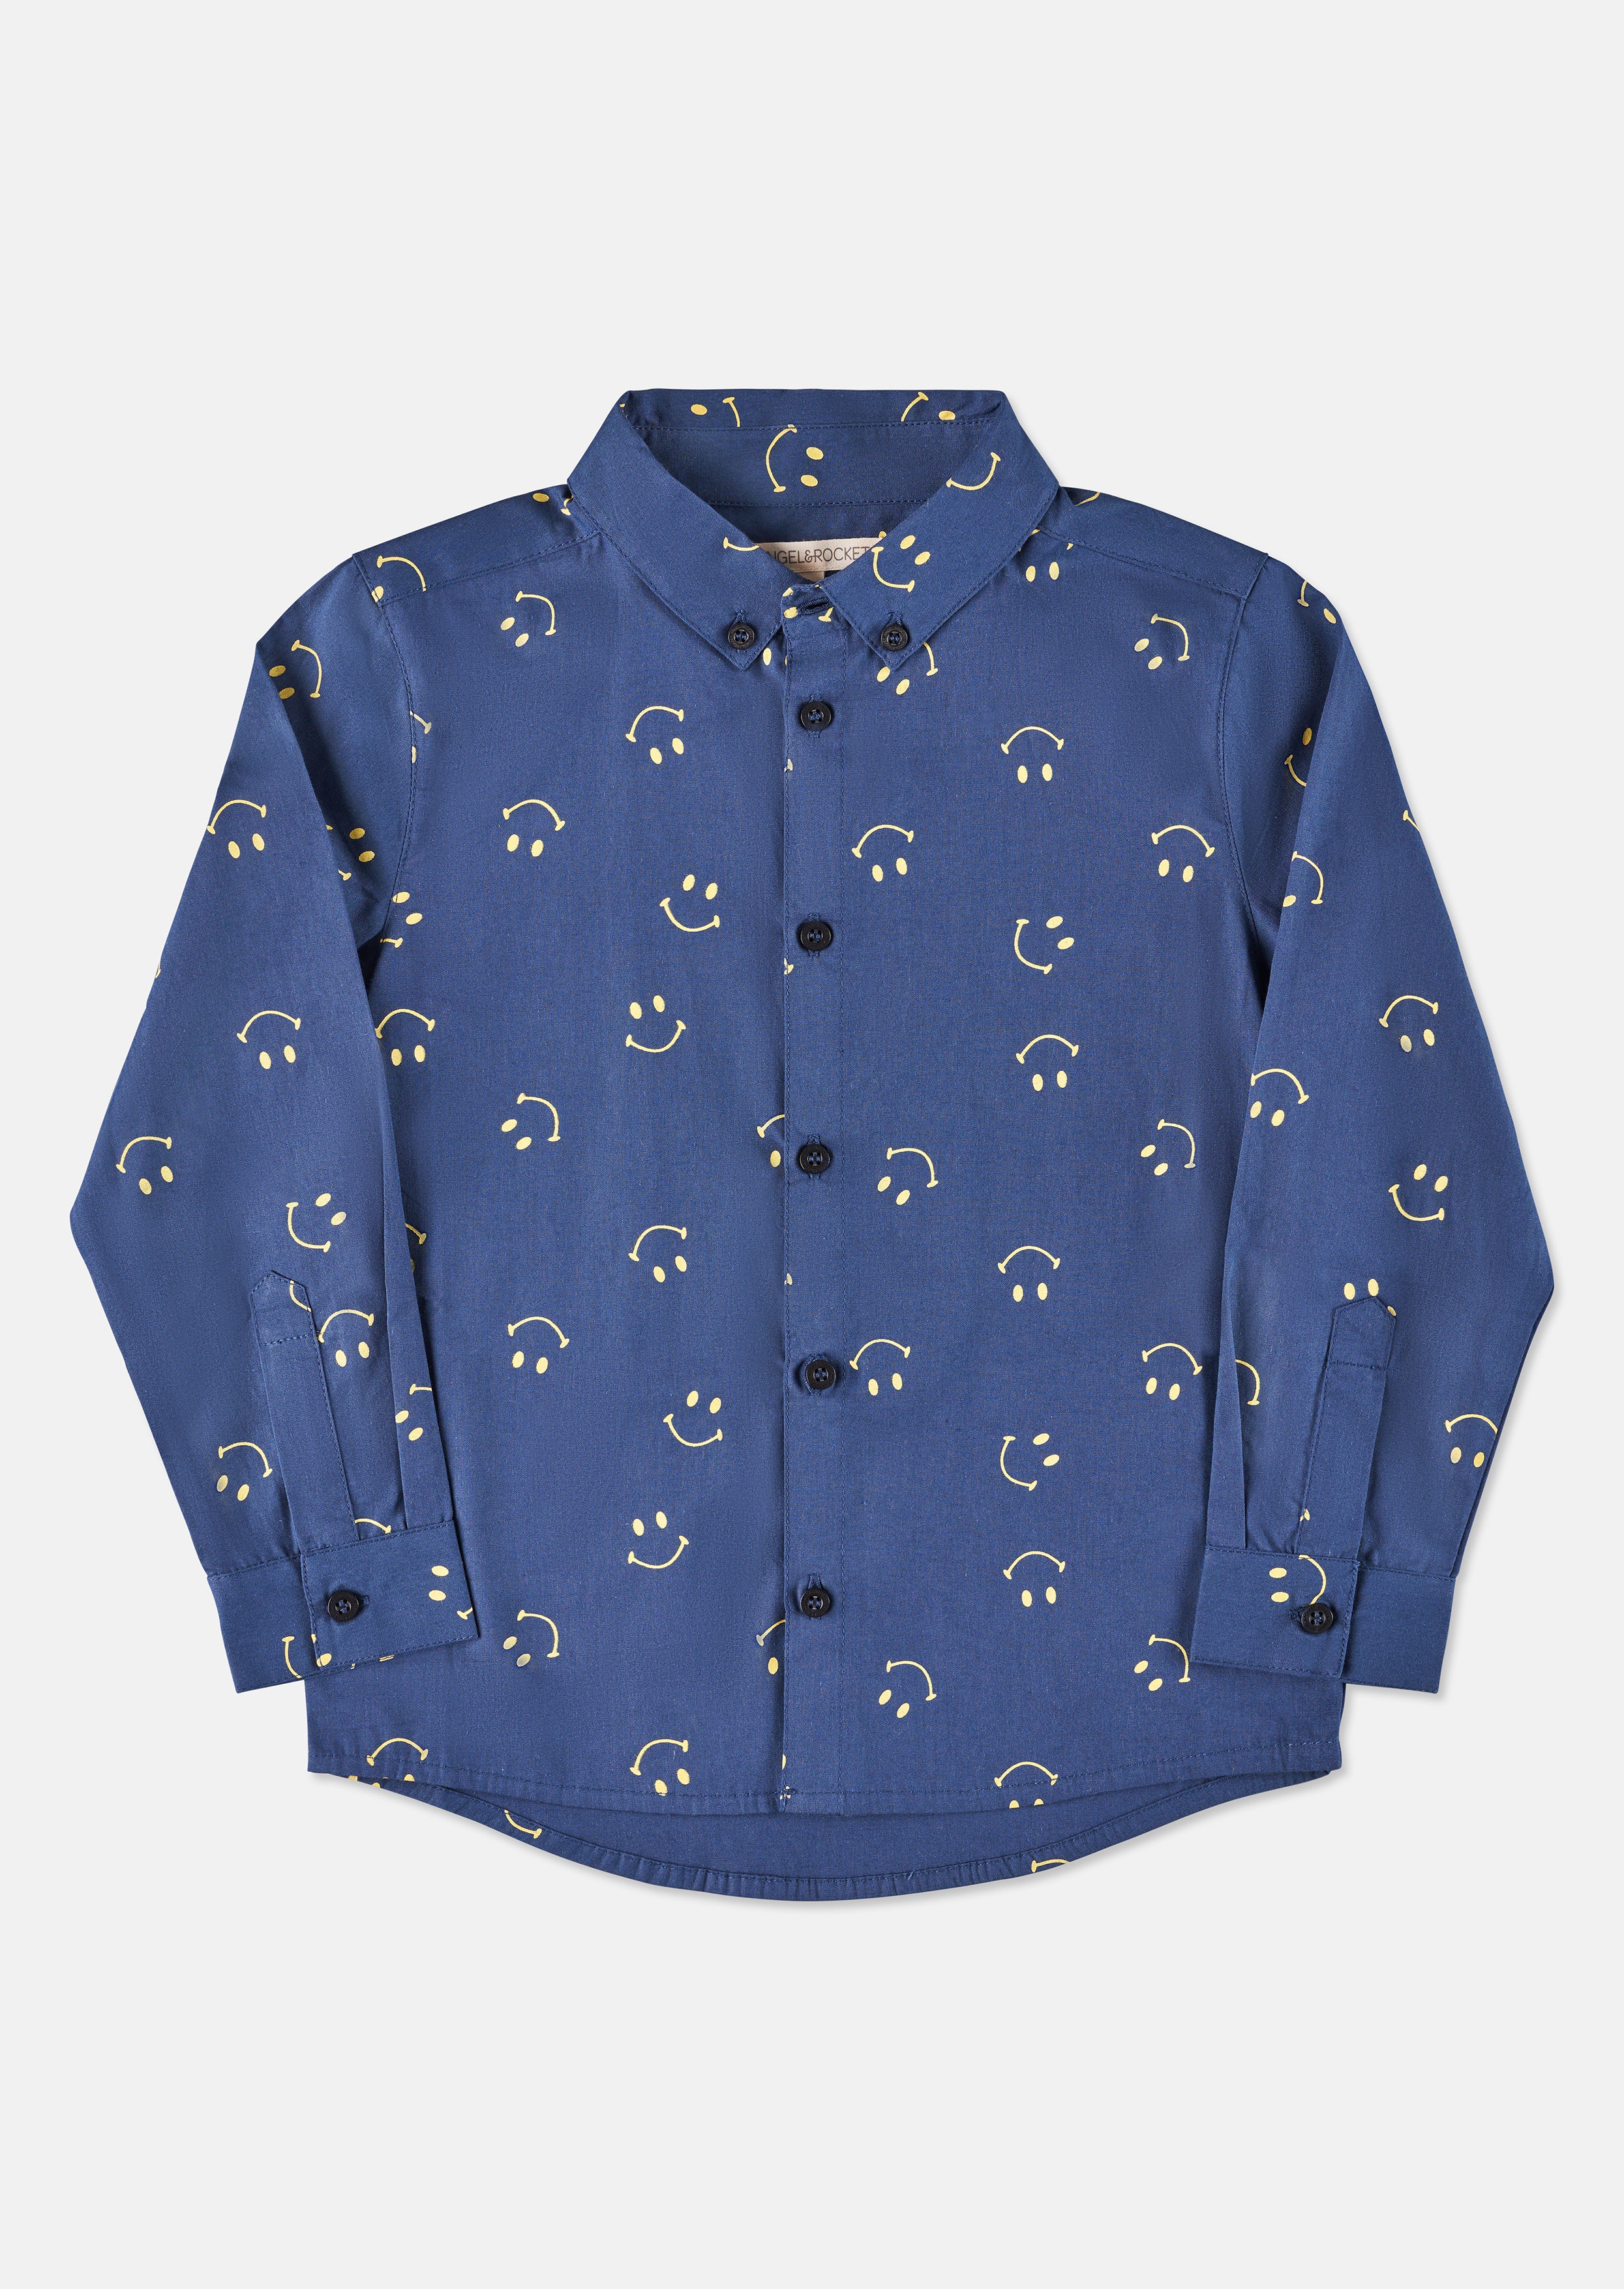 Boys Smile Printed Full Sleeves Blue Shirt